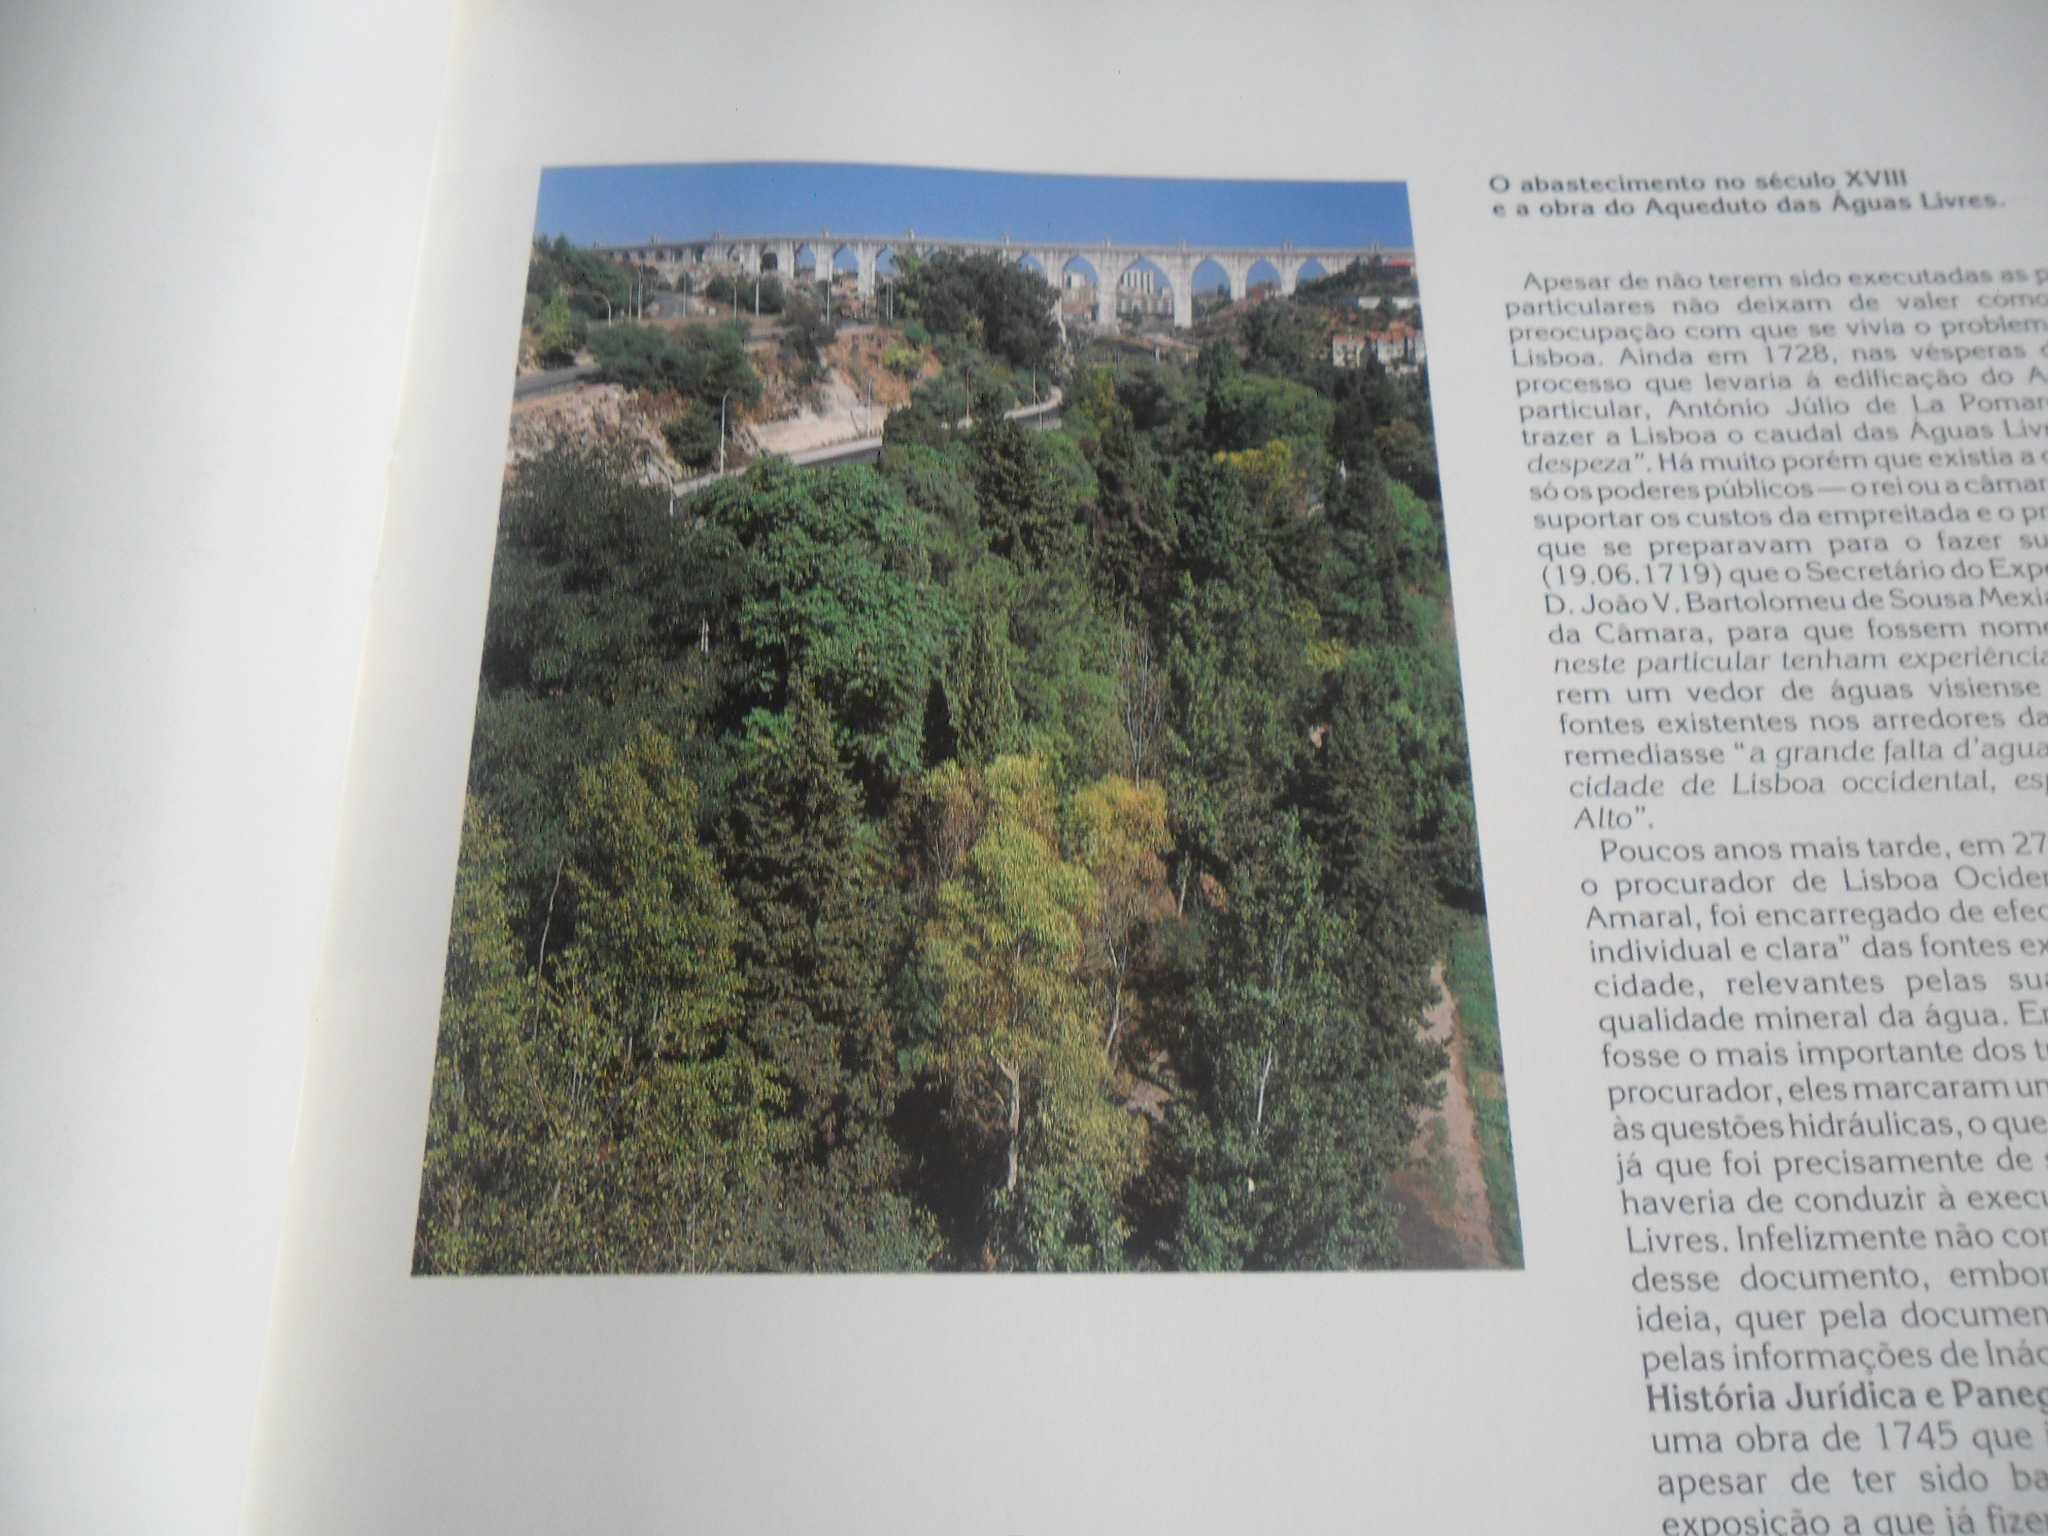 "Chafarizes de Lisboa" - Jorge Cruz Silva e Joaquim Caetano-1ª Ed 1991